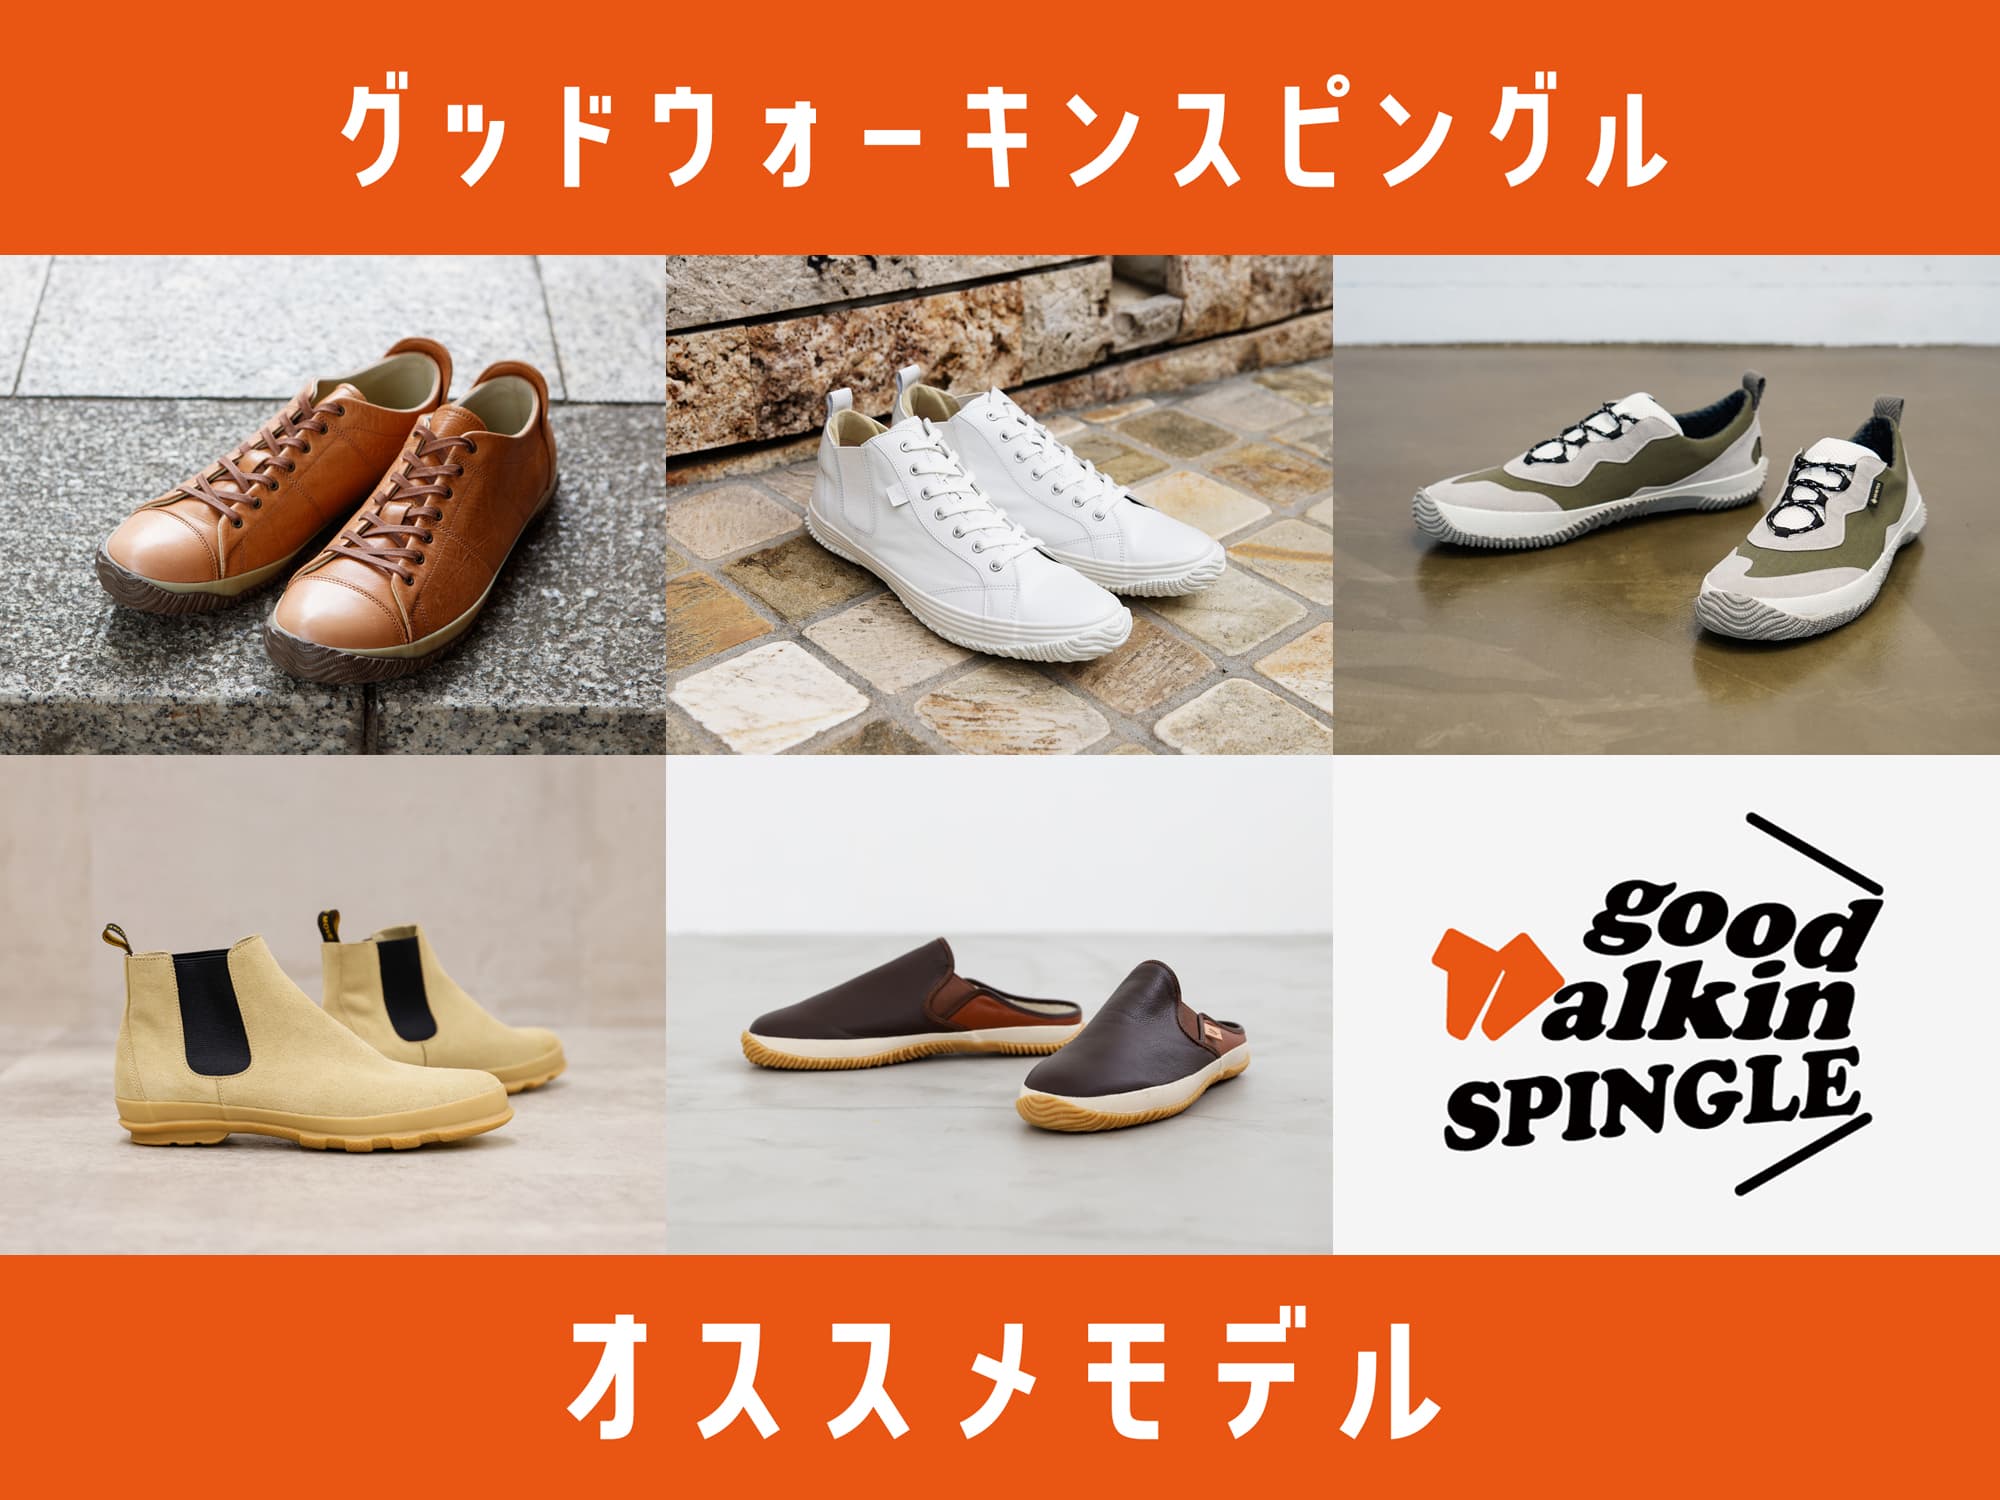 good walkin SPINGLE おすすめモデル紹介 - ブログ - 国産